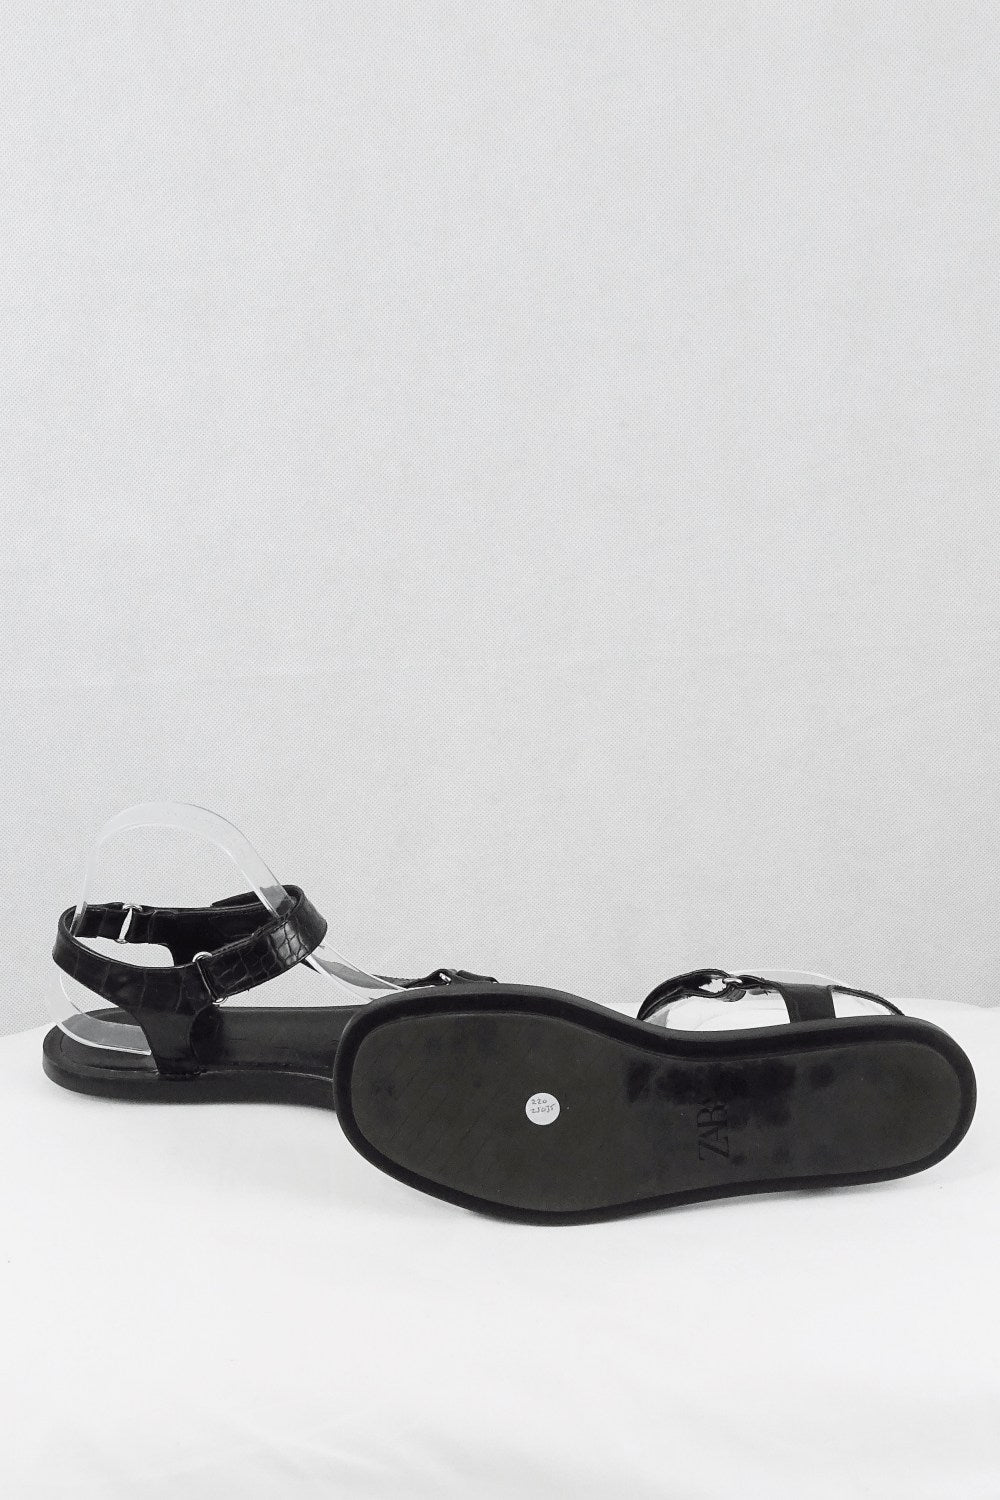 Zara Black Sandals 39